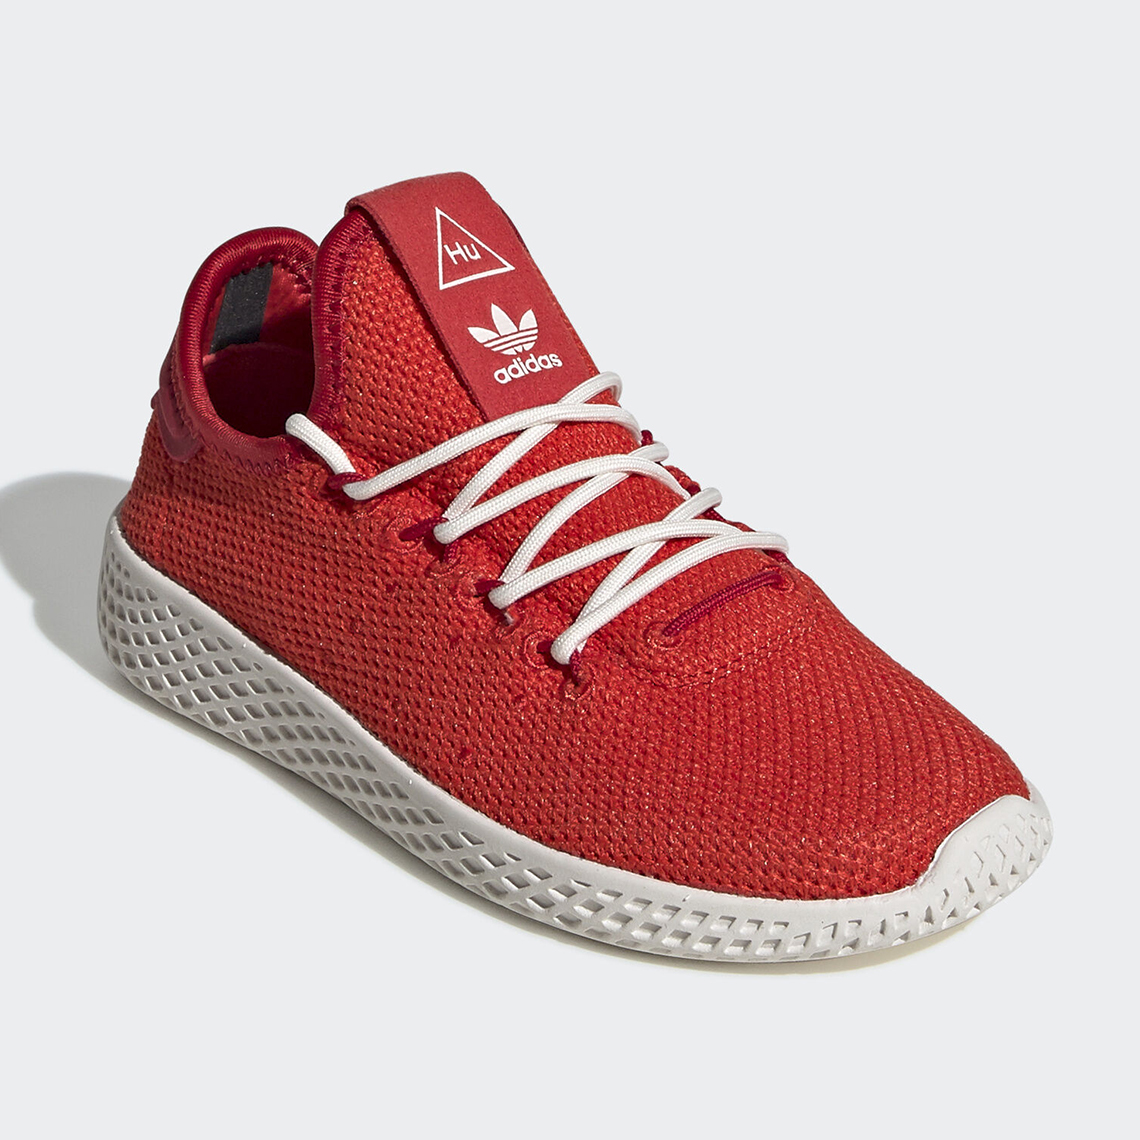 Pharrell Adidas Tennis Hu Red Fv0054 2